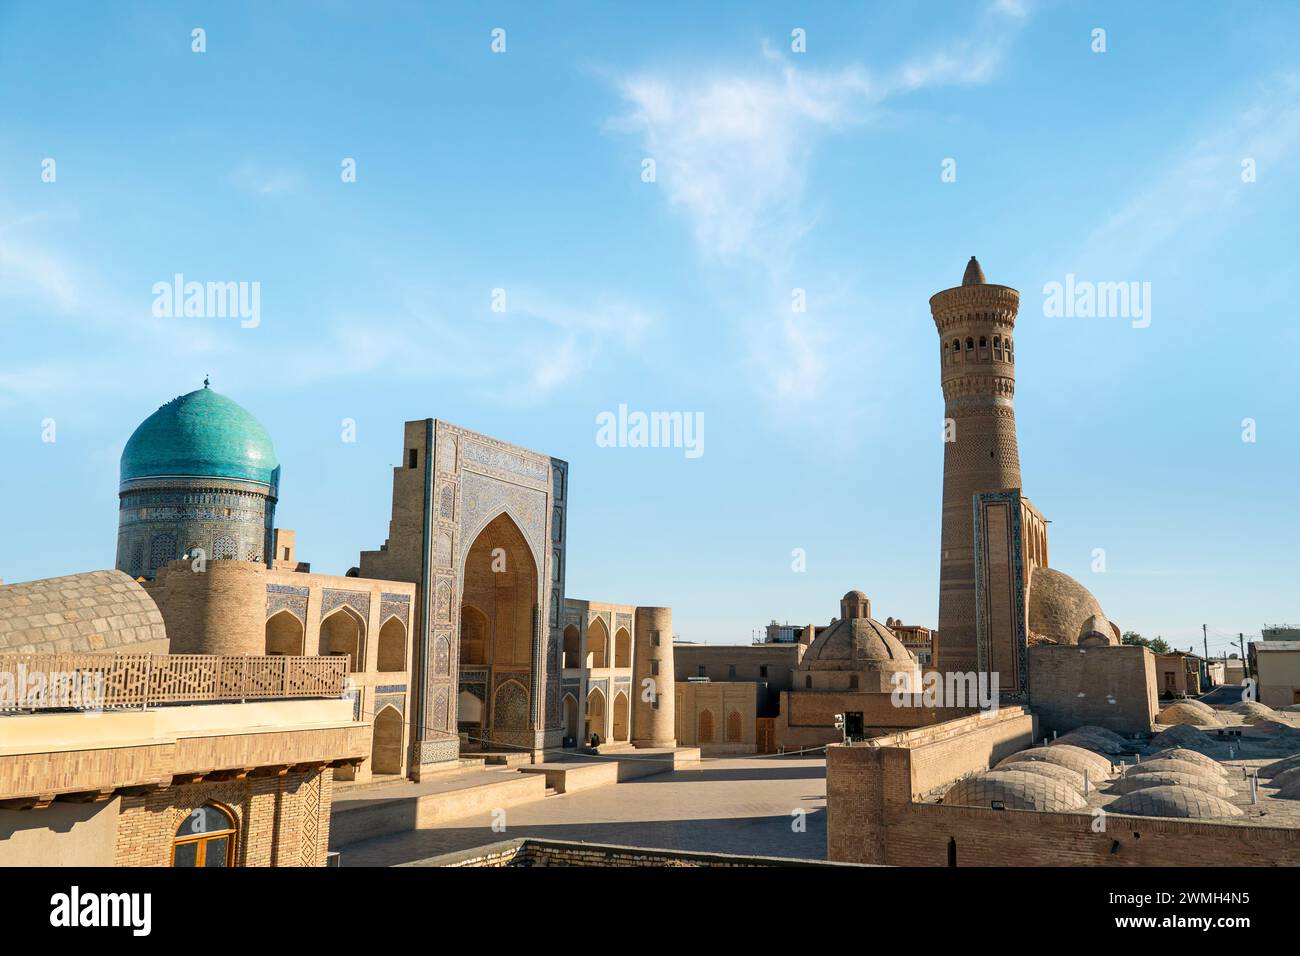 Awesome view of the Mir-i-Arab Madrasa, the Kalan Minaret and Kalan Mosque in Bukhara, Uzbekistan. Po-i-Kalan complex is a popular tourist attraction Stock Photo